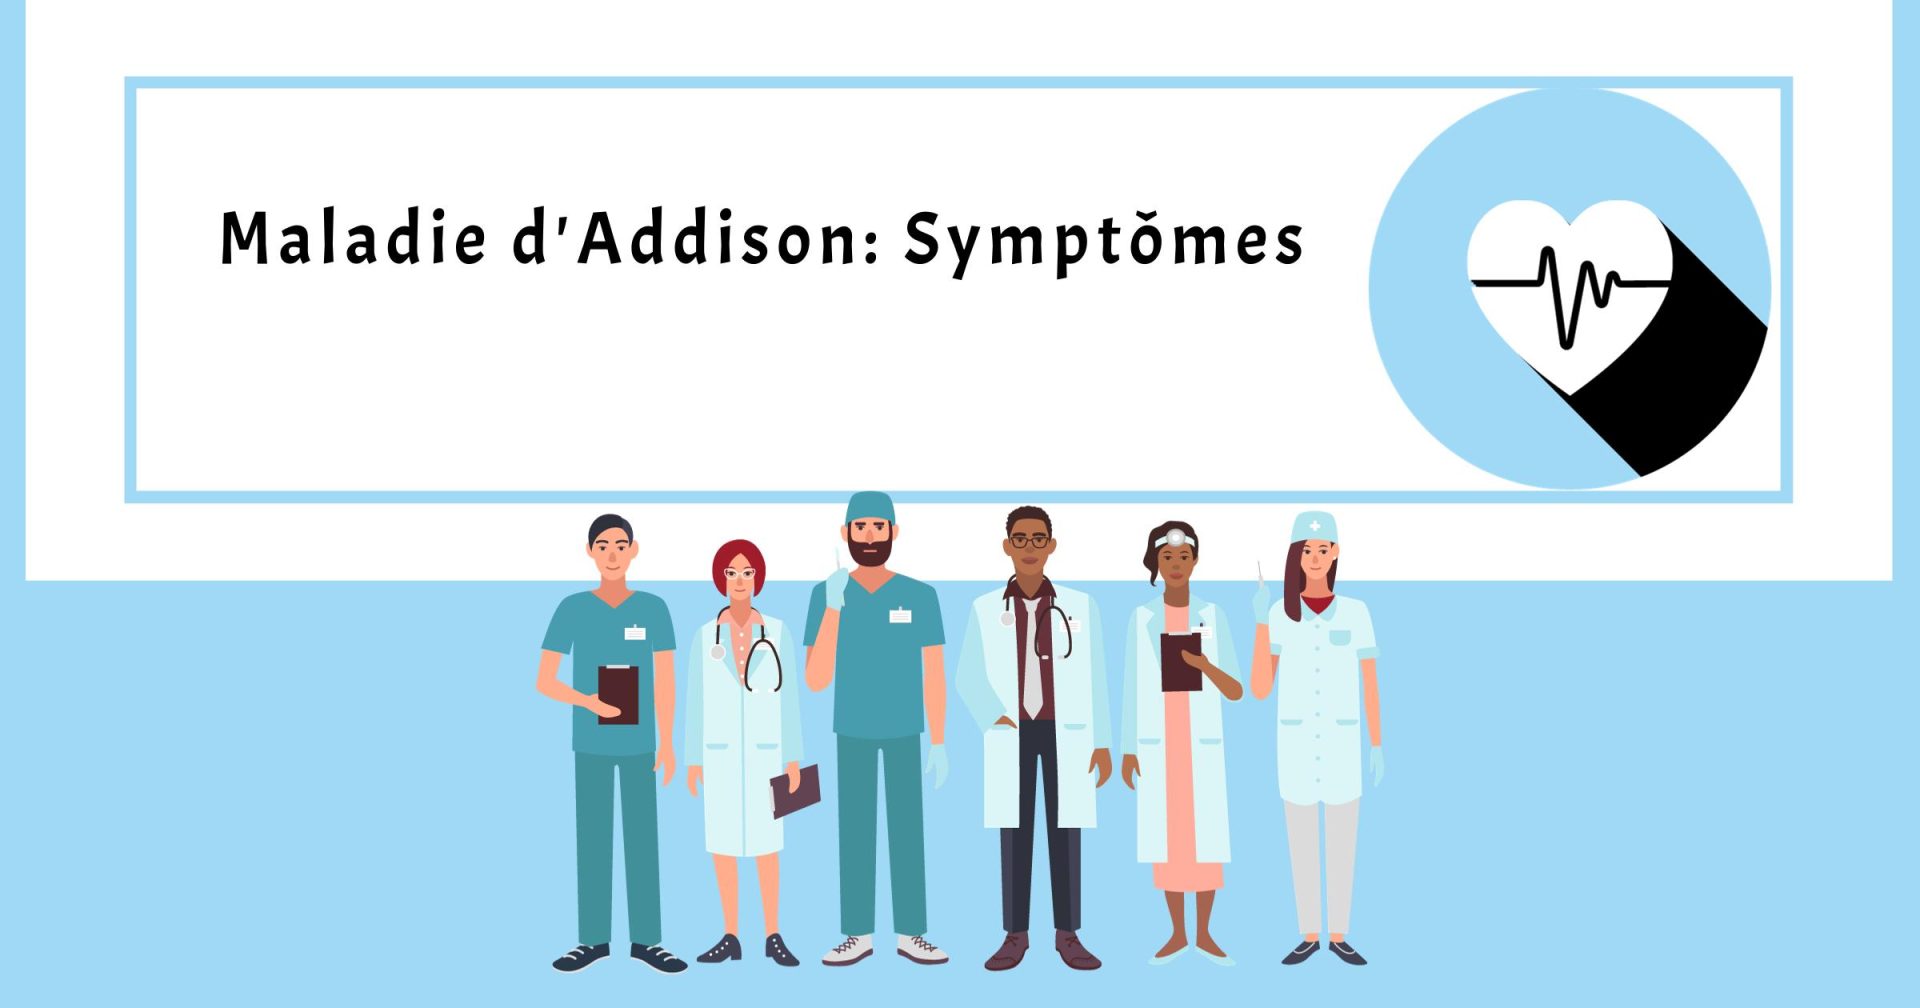 Maladie d'Addison: Symptômes